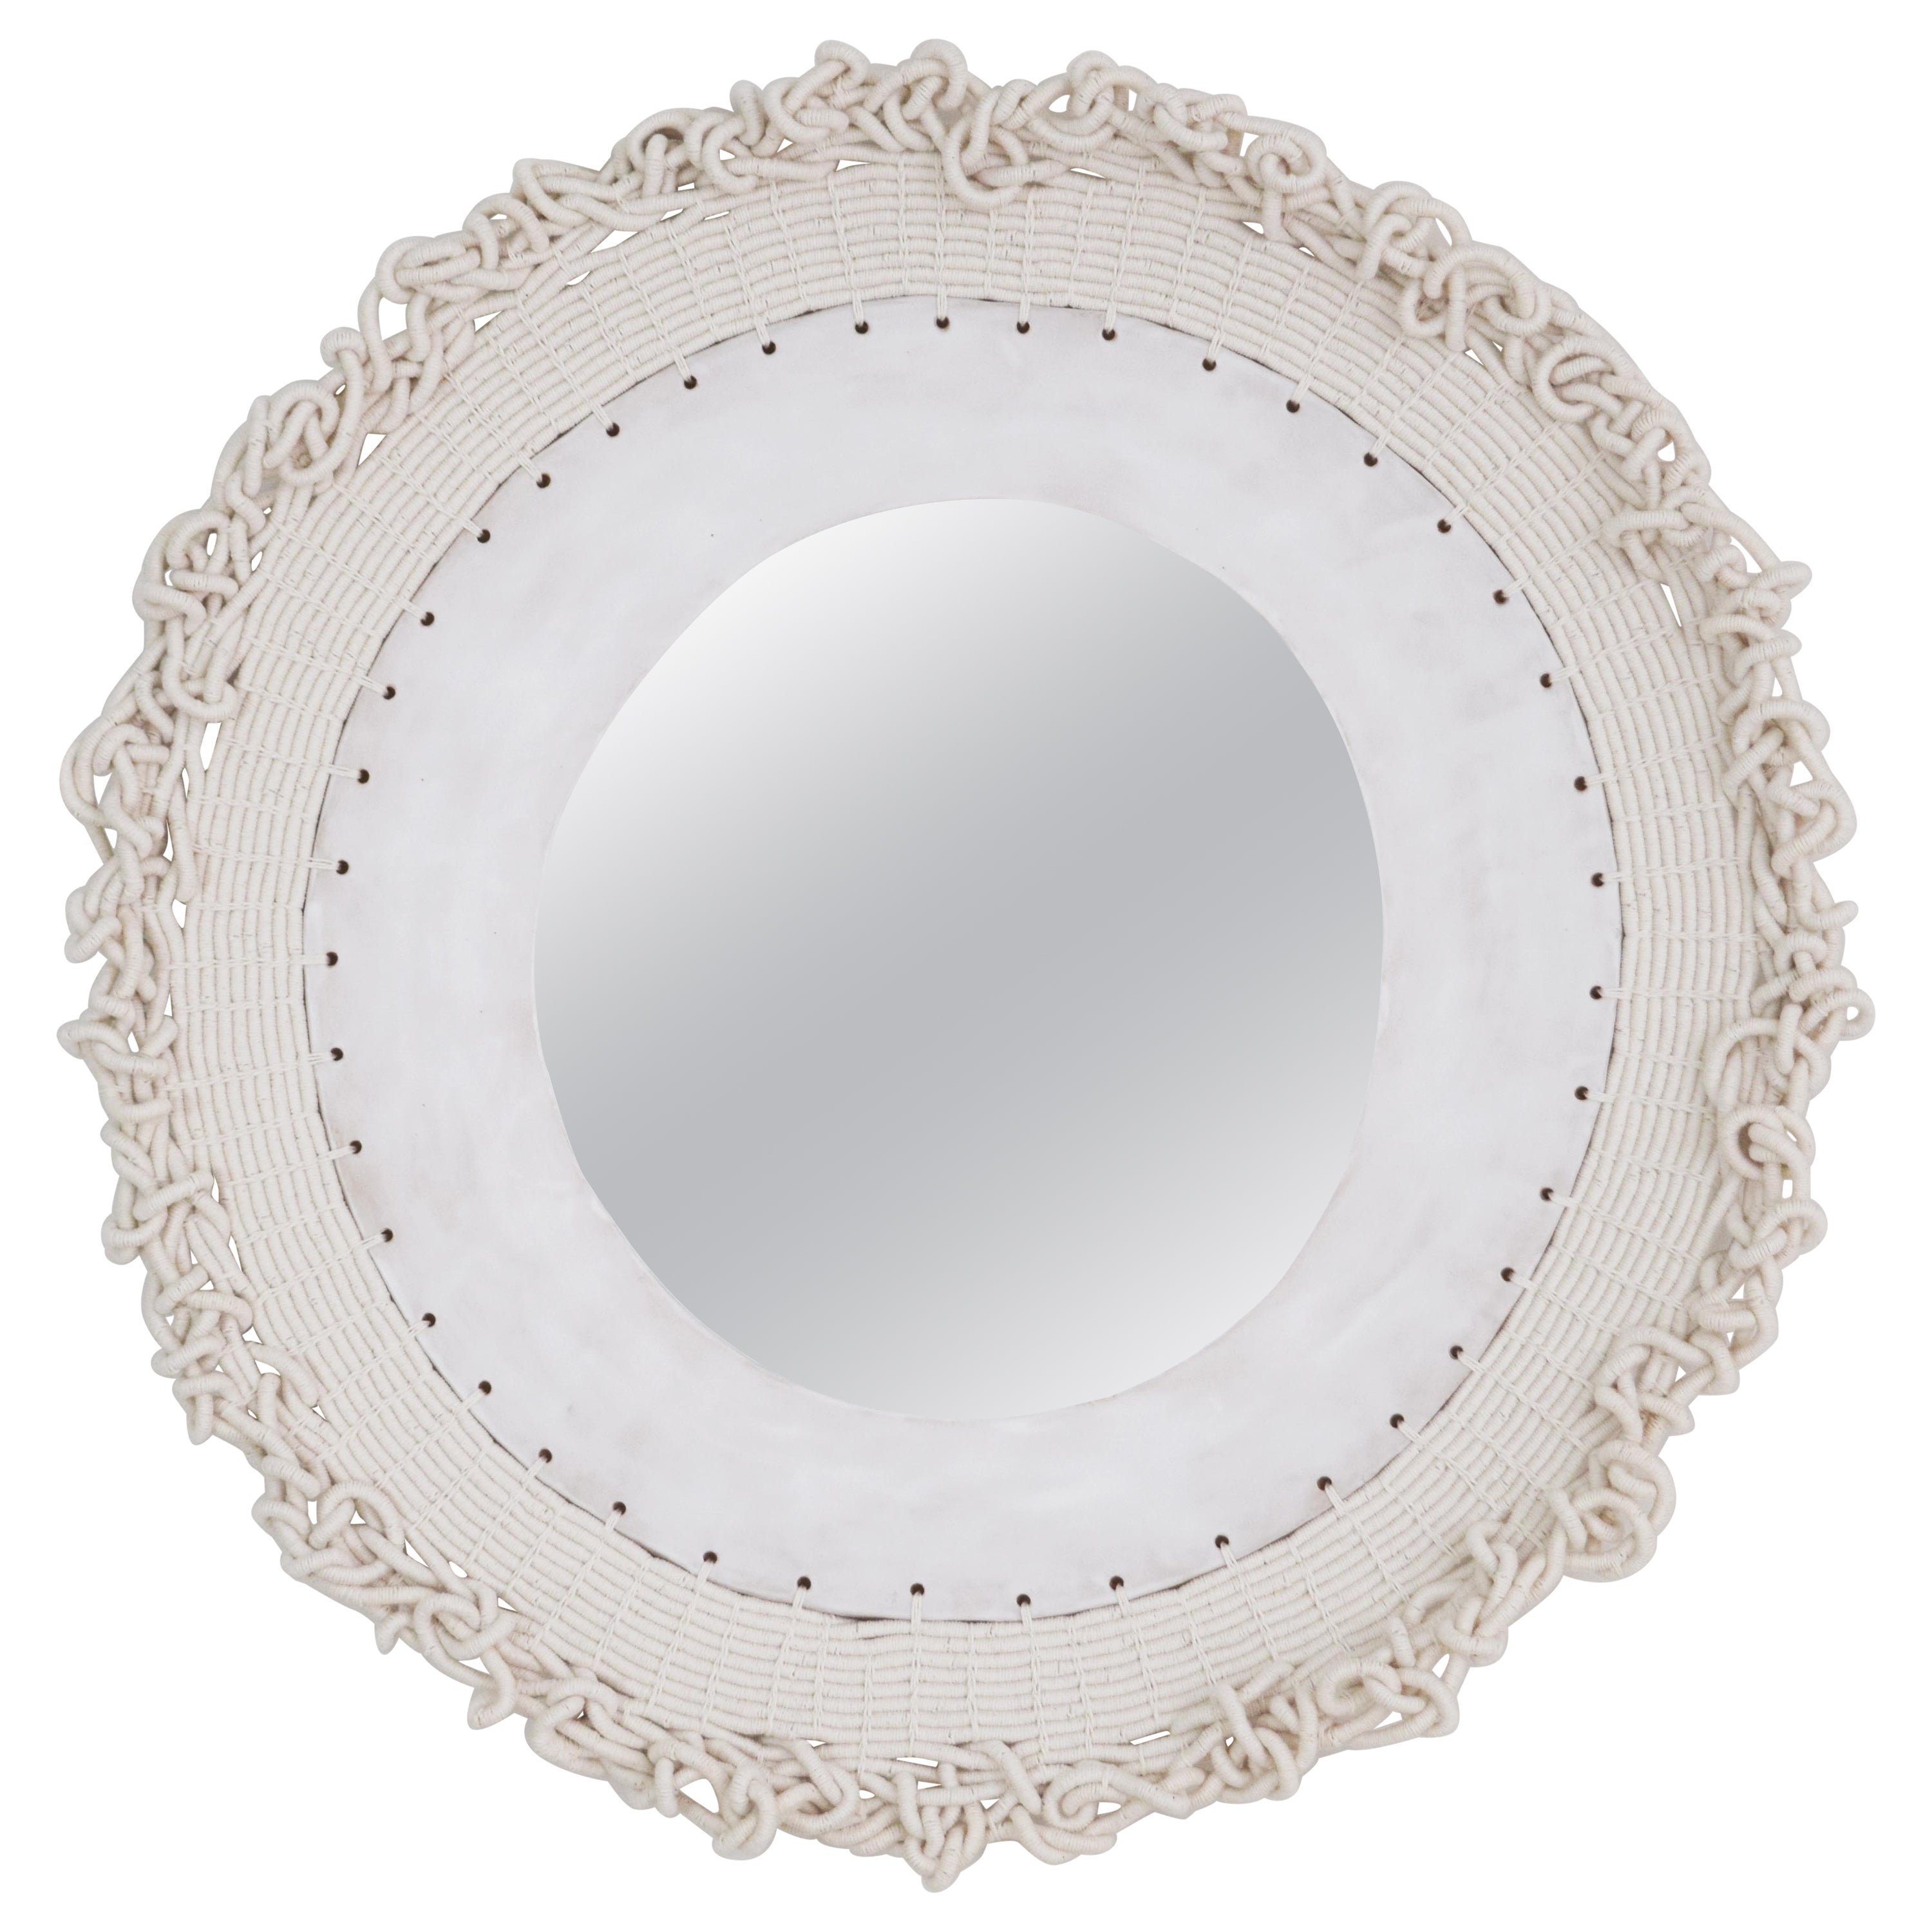 Handmade 30" Round Mirror #773, Woven White Cotton and White Glazed Ceramic